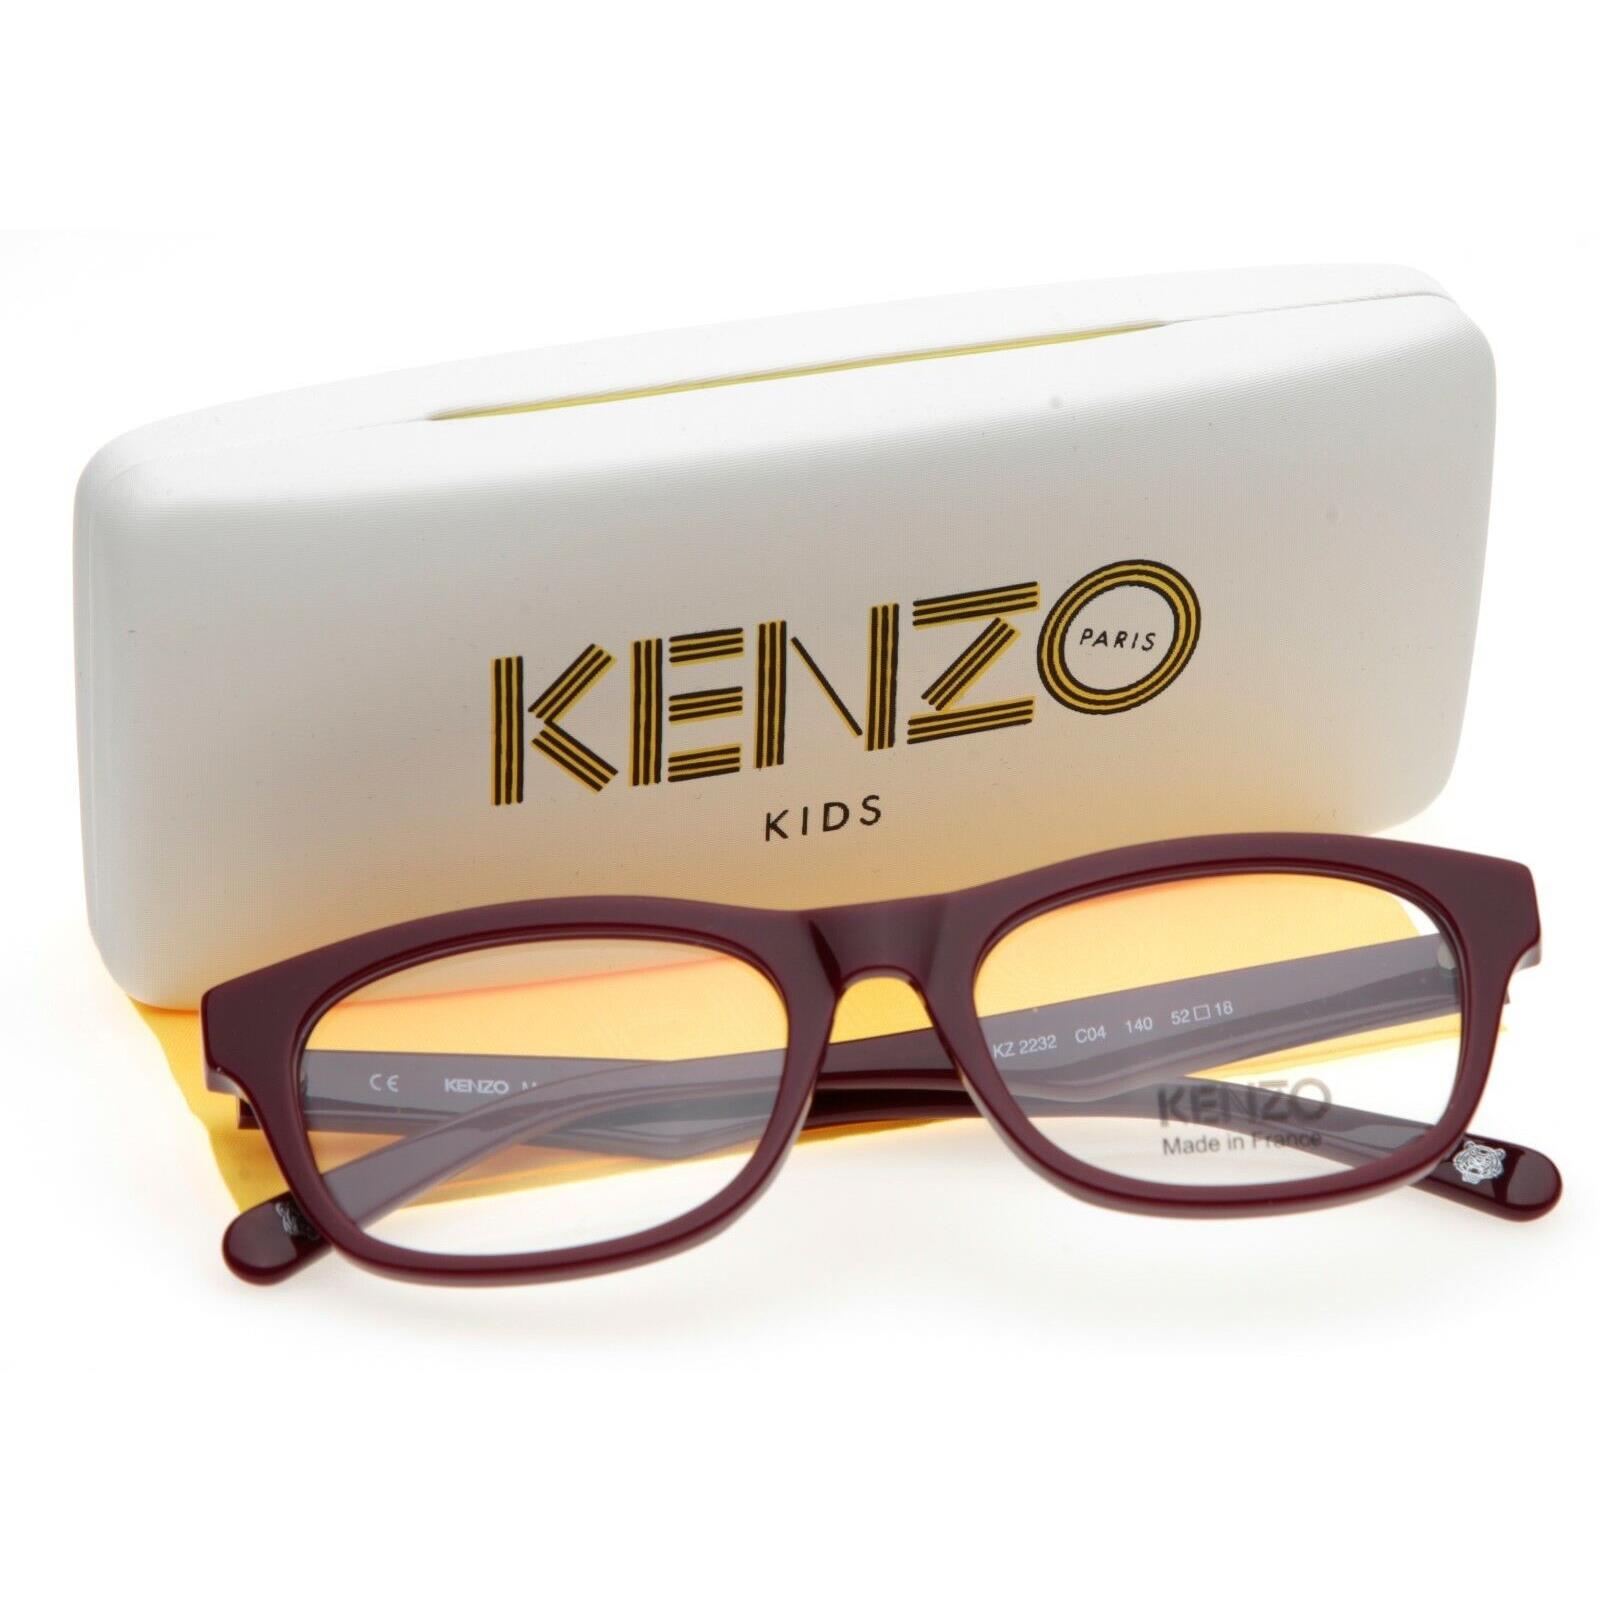 Kenzo Brand - Shop Kenzo fashion accessories | Fash Brands - Page 3